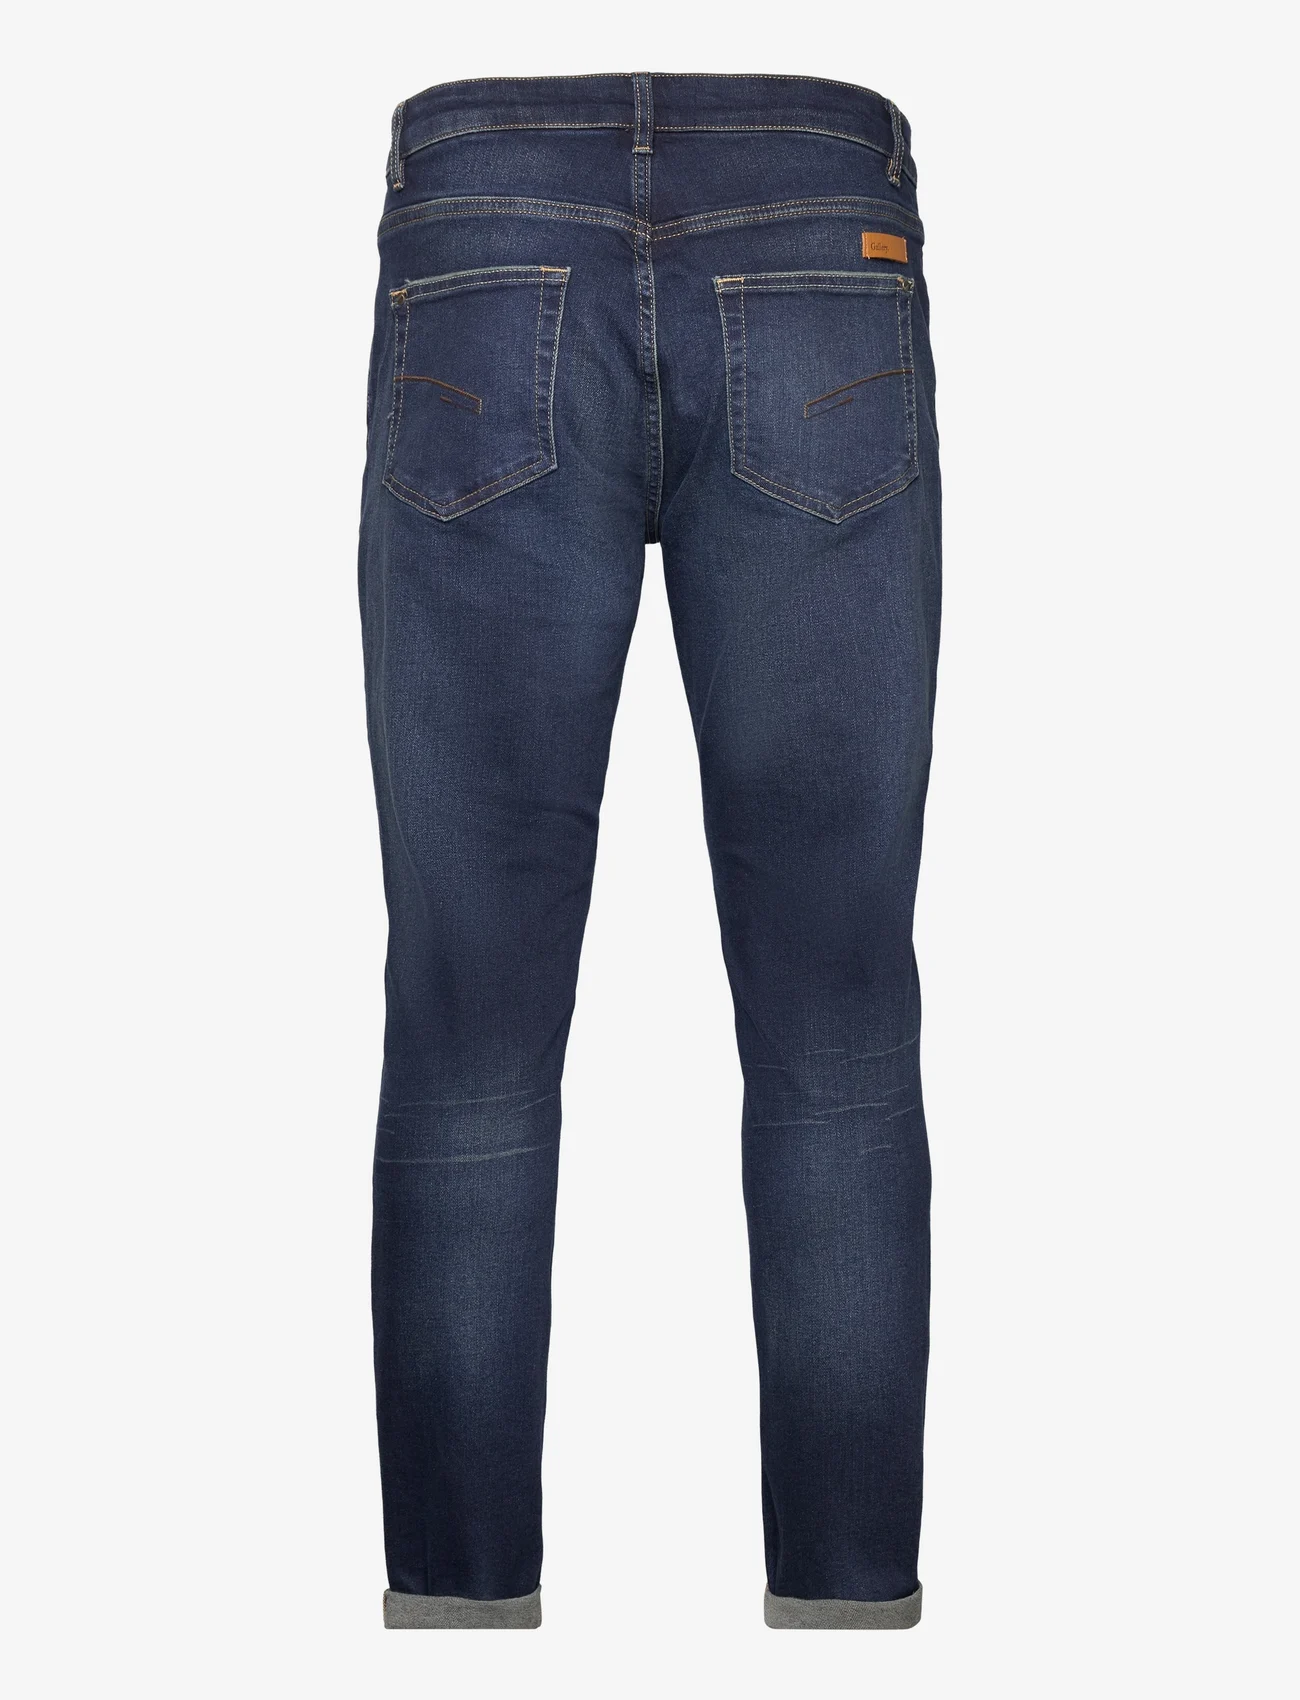 Mos Mosh Gallery - MMGEric Verona Jeans - slim jeans - dark blue denim - 1